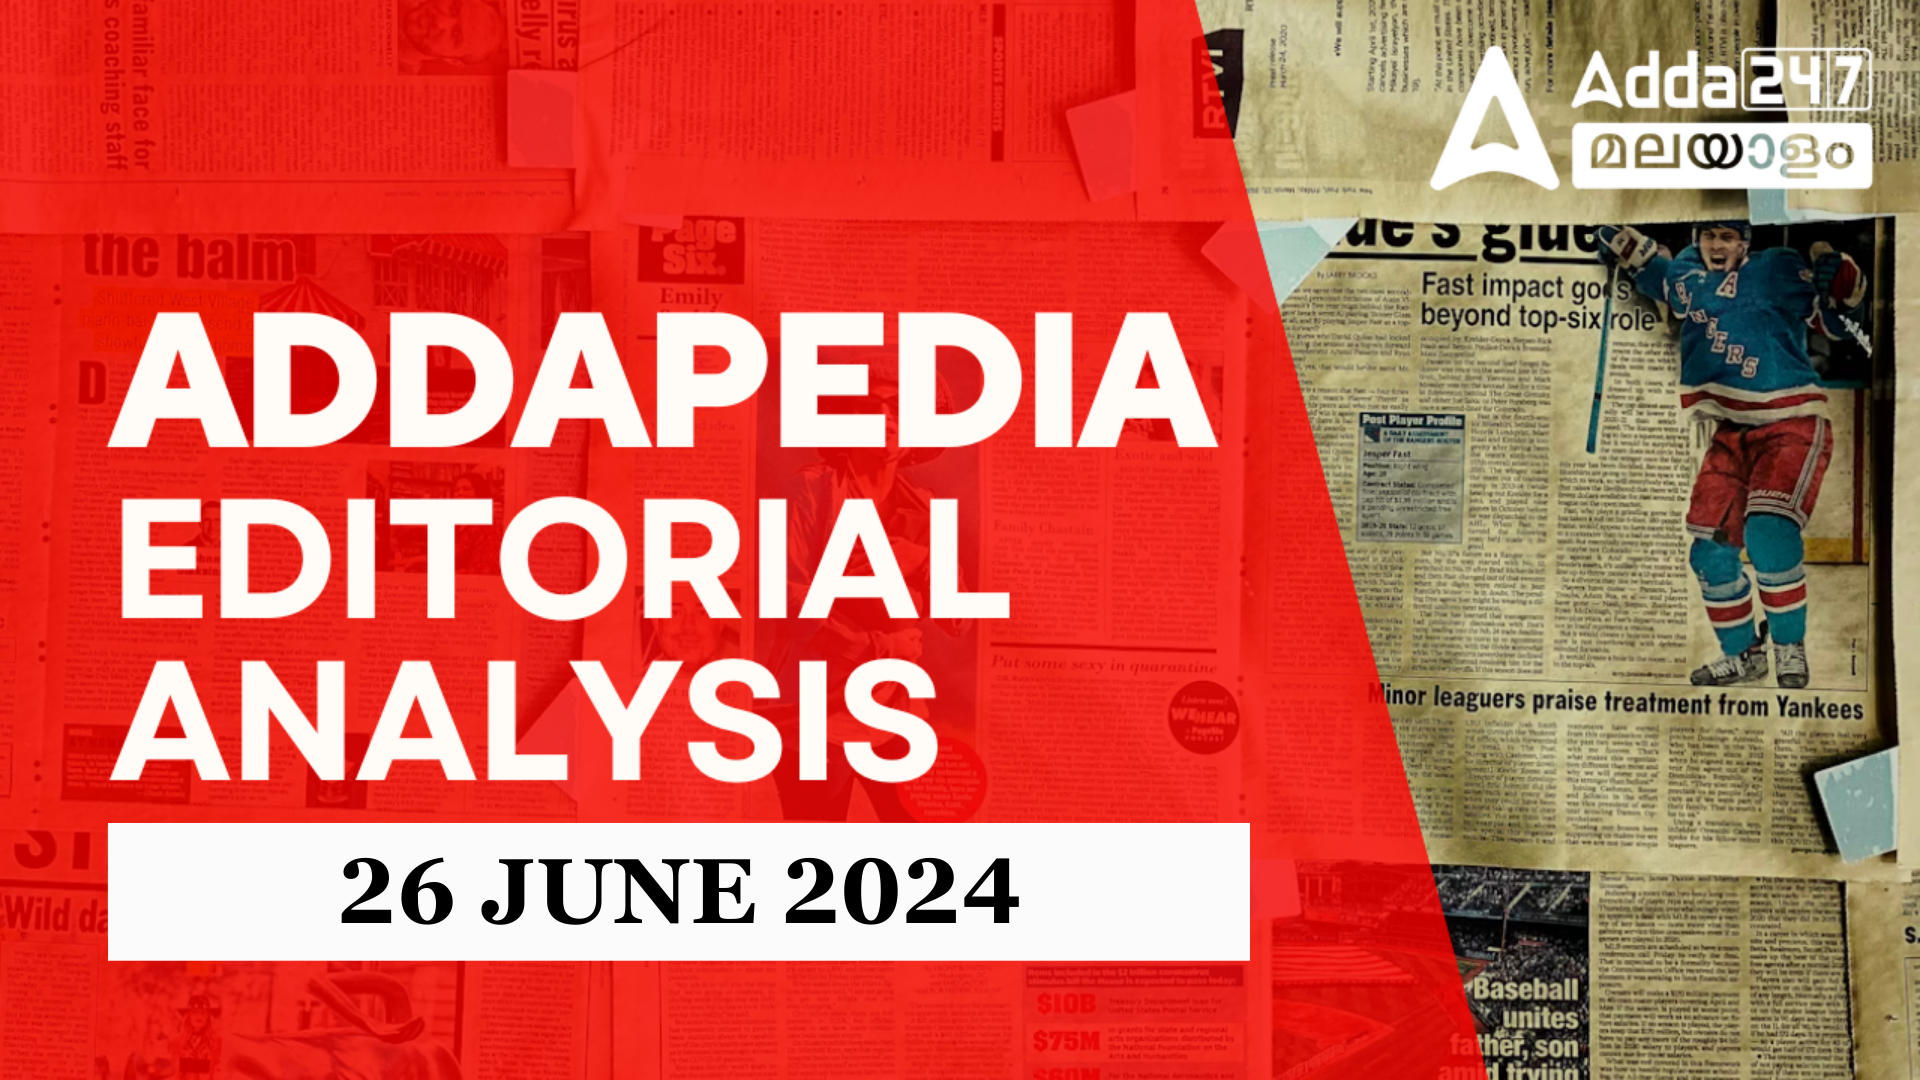 Addapedia Editorial Analysis - 26 June 2024, Download PDF